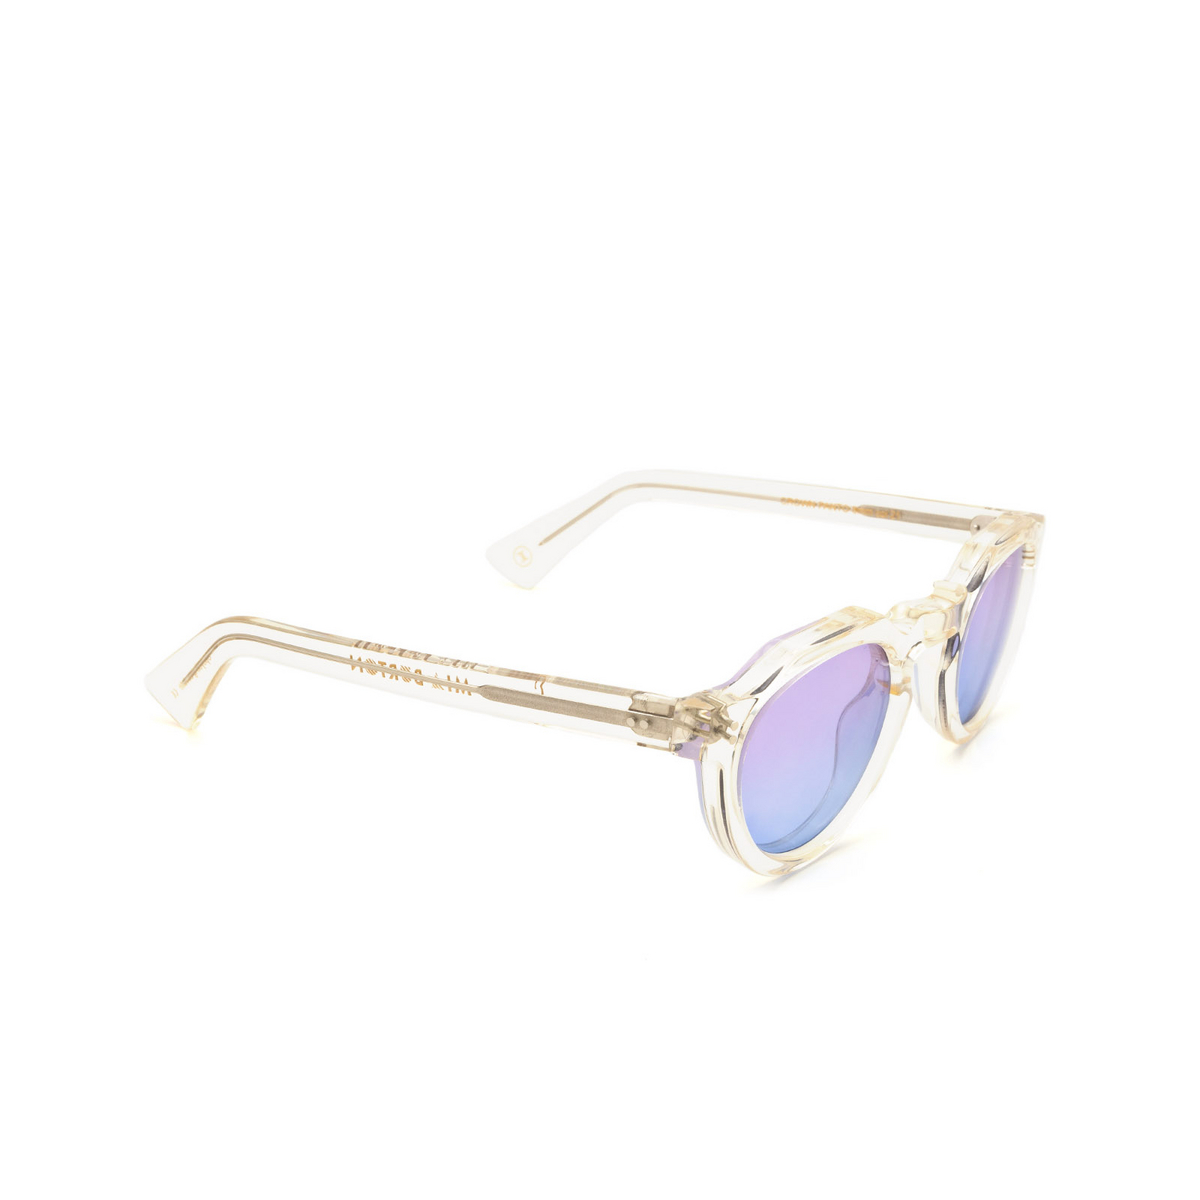 Lesca® Sunglasses: Crown Panto X Mia Burton color 21 - DAYDREAMER / NIGHT THINKER GRADIENT - front view.